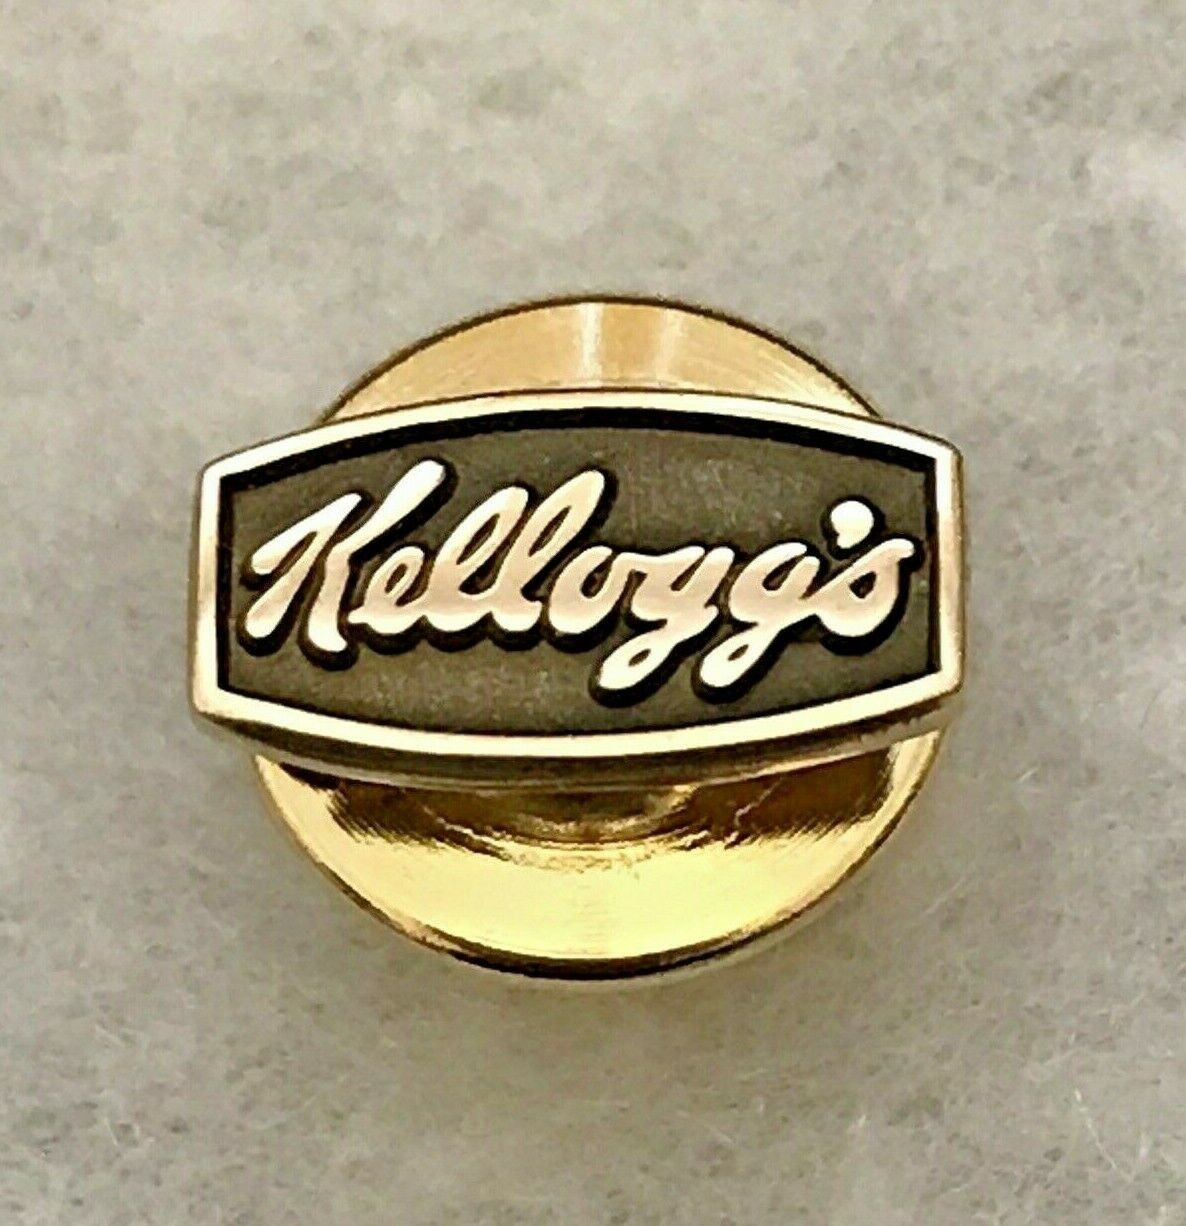 10k Yellow Gold Kellogg's Manufacturing Company Pin Lapel Pin Tie Pin